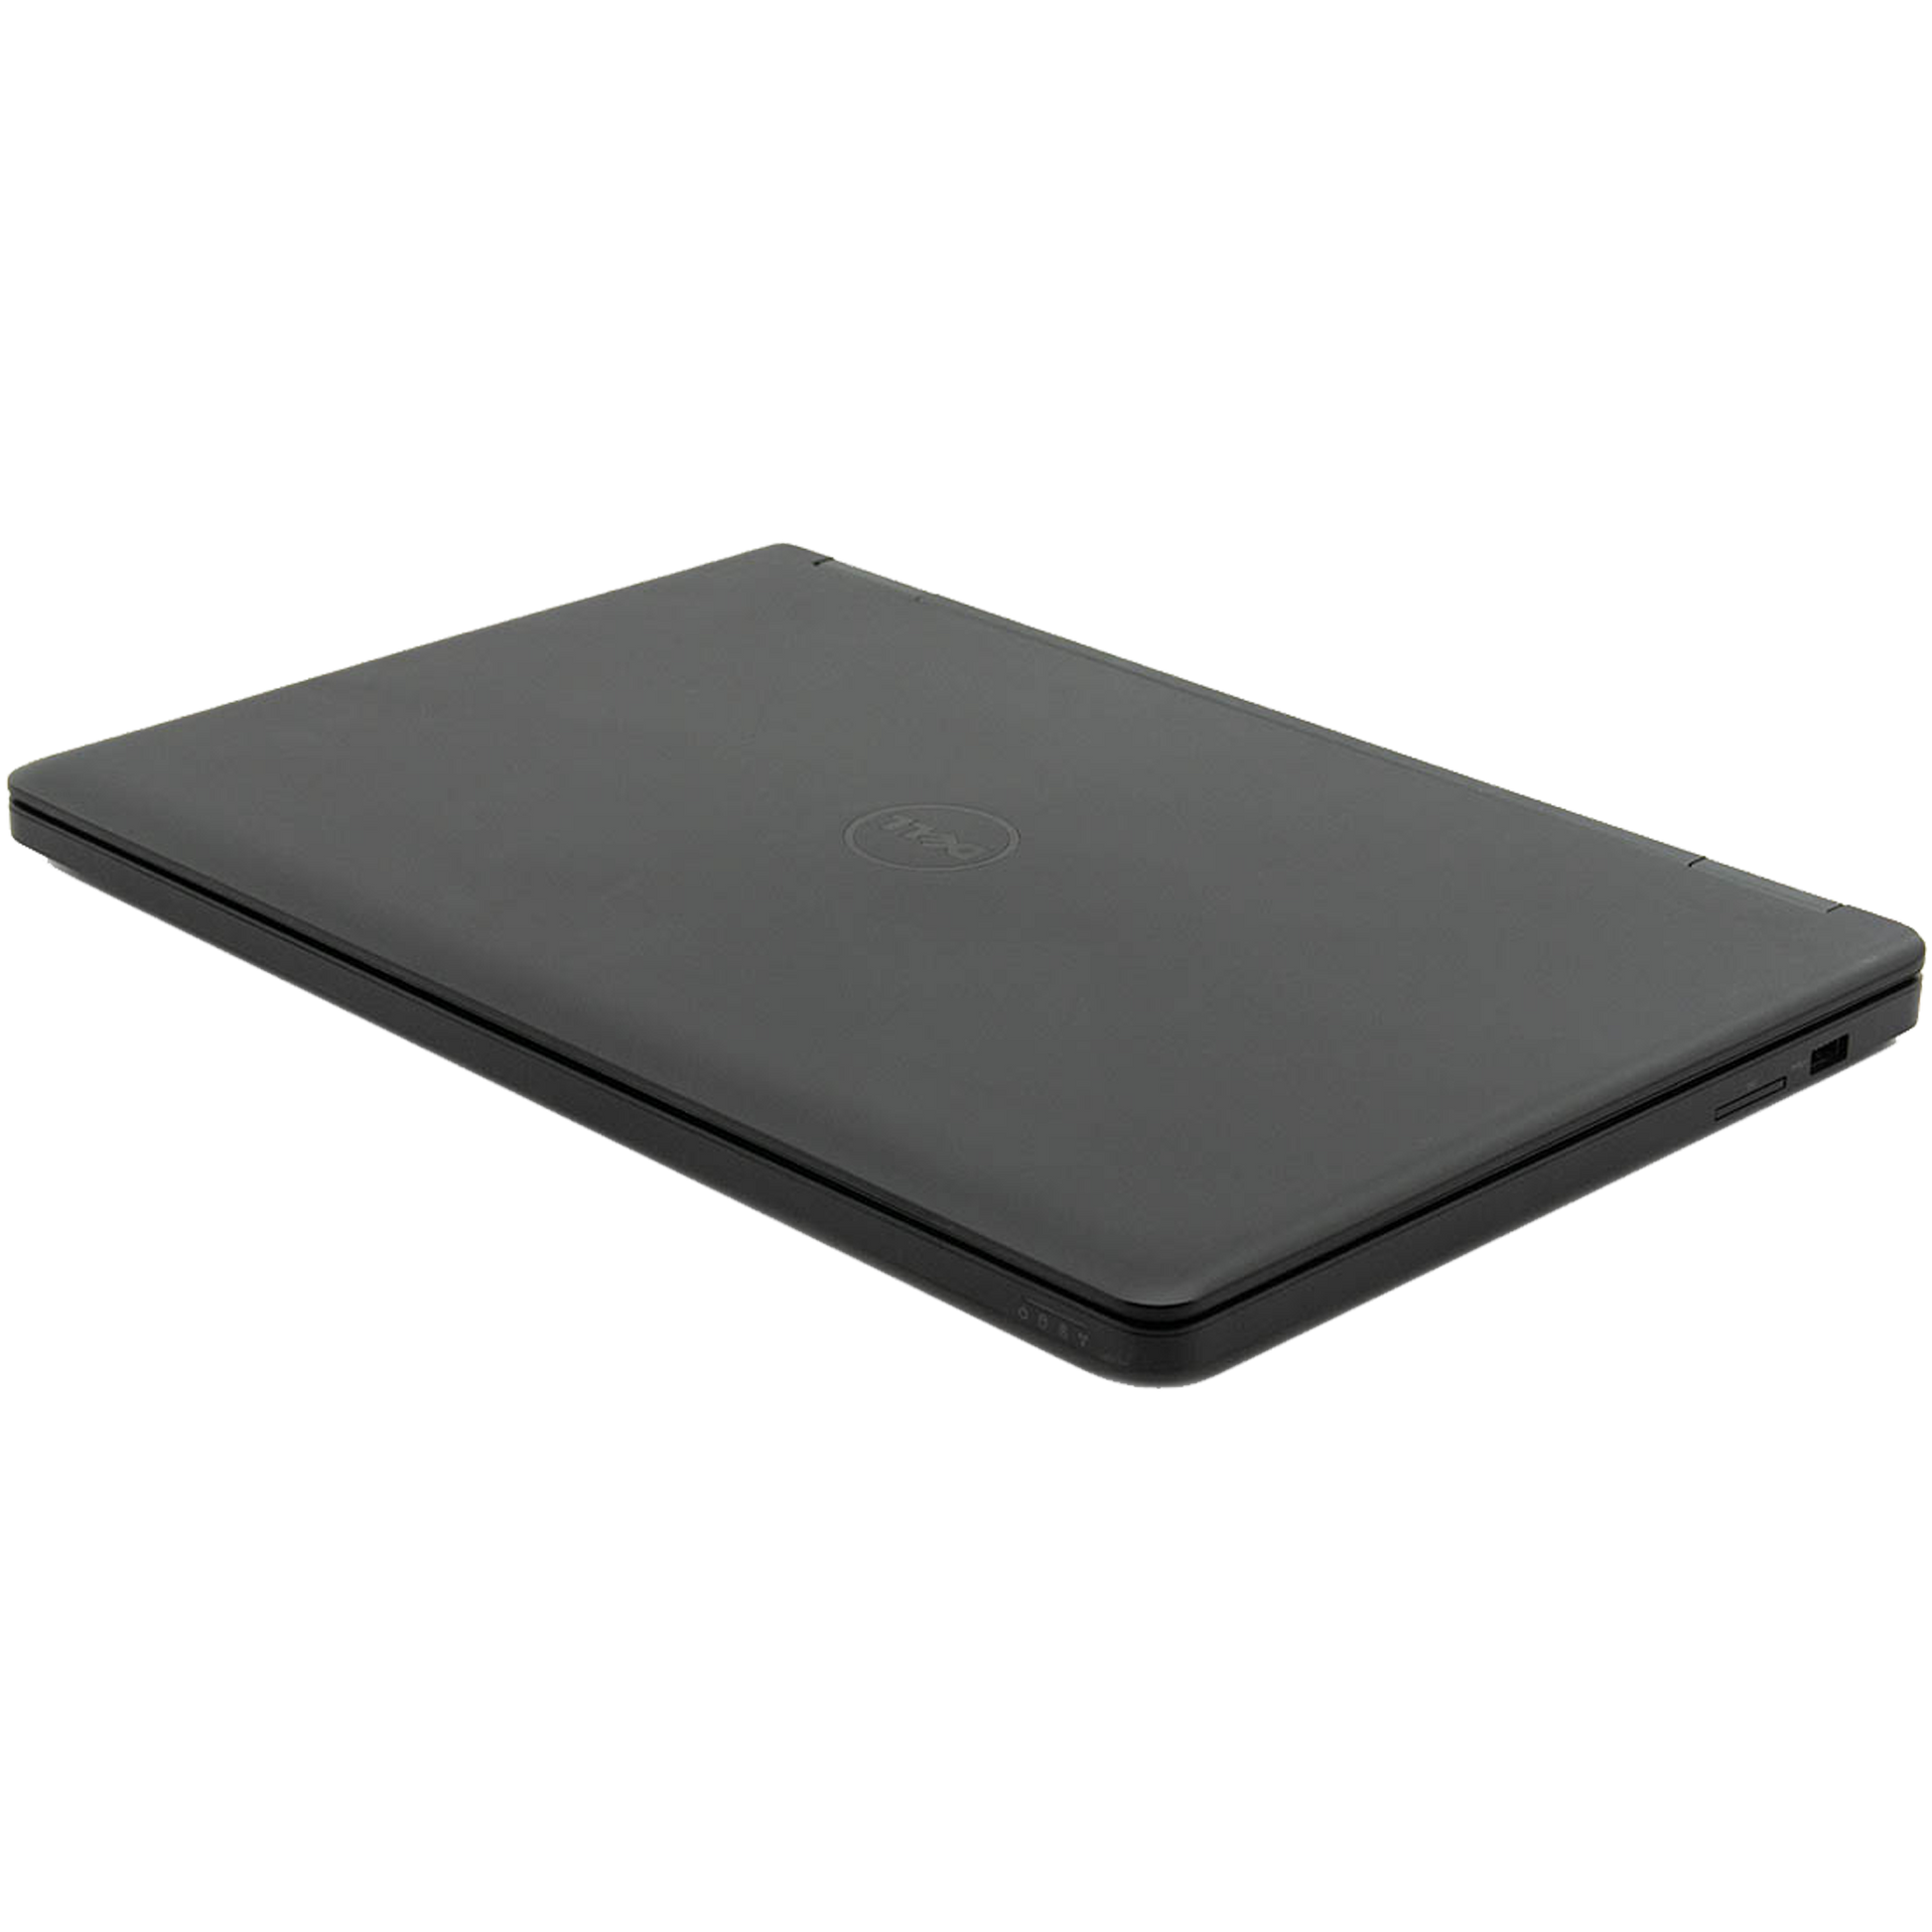 Dell Latitude 5550 Intel i7, 5th Gen Laptop with 8GB Ram + NumPad Laptops - Refurbished